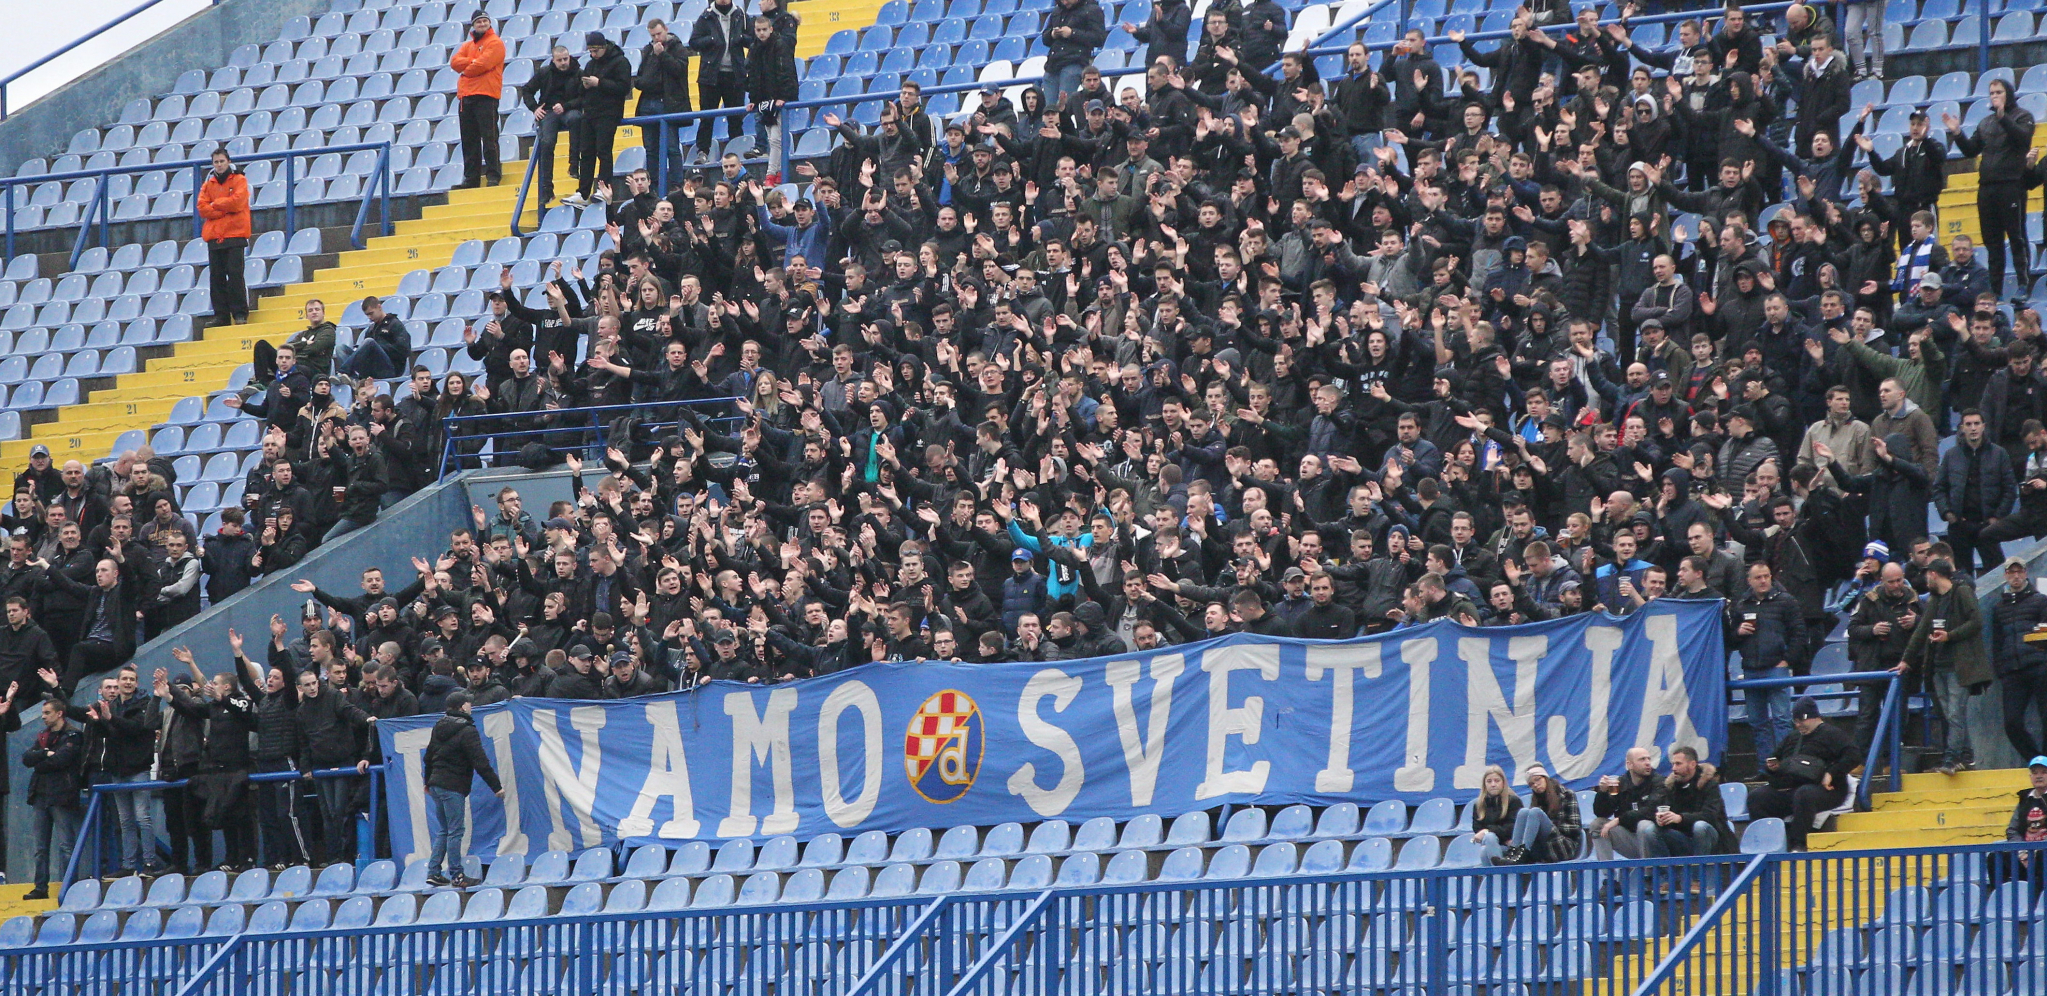 HOĆE LI UEFA REAGOVATI?! Ustaške zastave u Zagrebu, Dinamo dočekuje Zvezdu bez navijača? (FOTO)